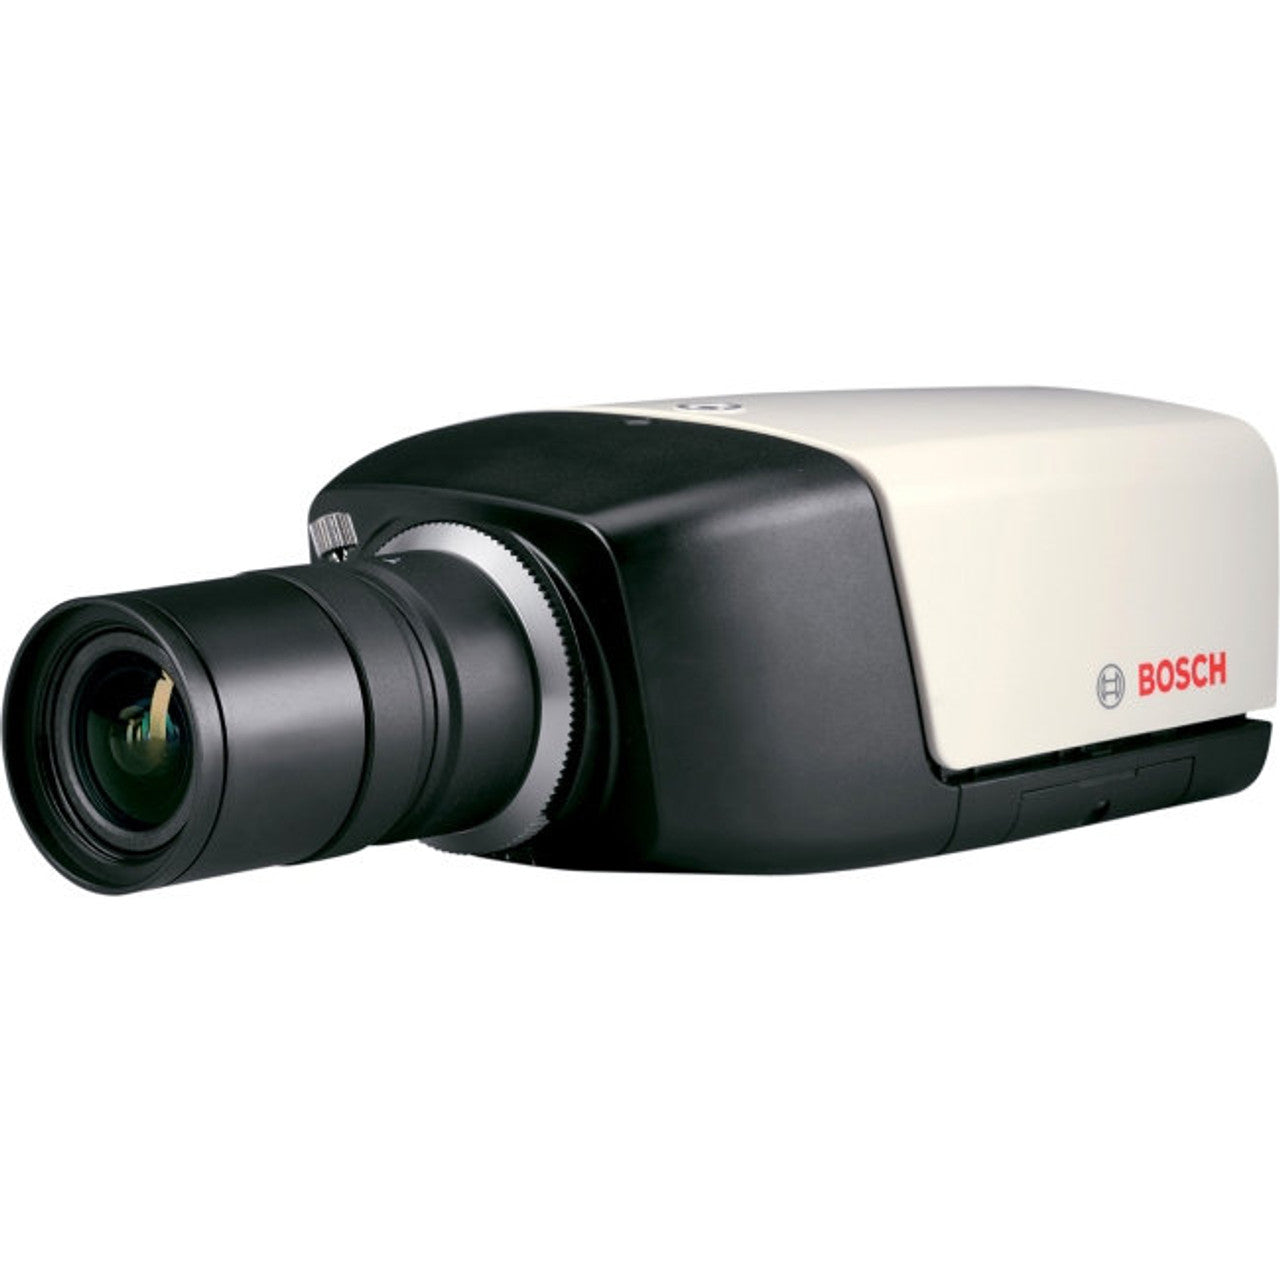 Bosch NBC255-P - IP Camera with 2.5-10 mm manual varifocal lens. P.O.E or 12 VDC